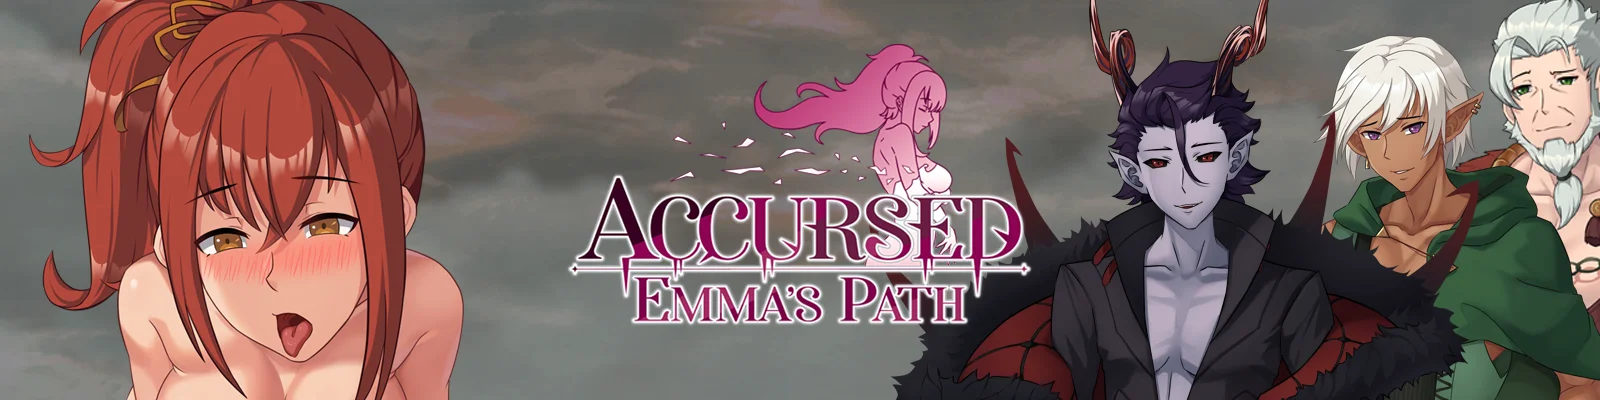 Accursed: Emma's Path v.0.1.21c RC